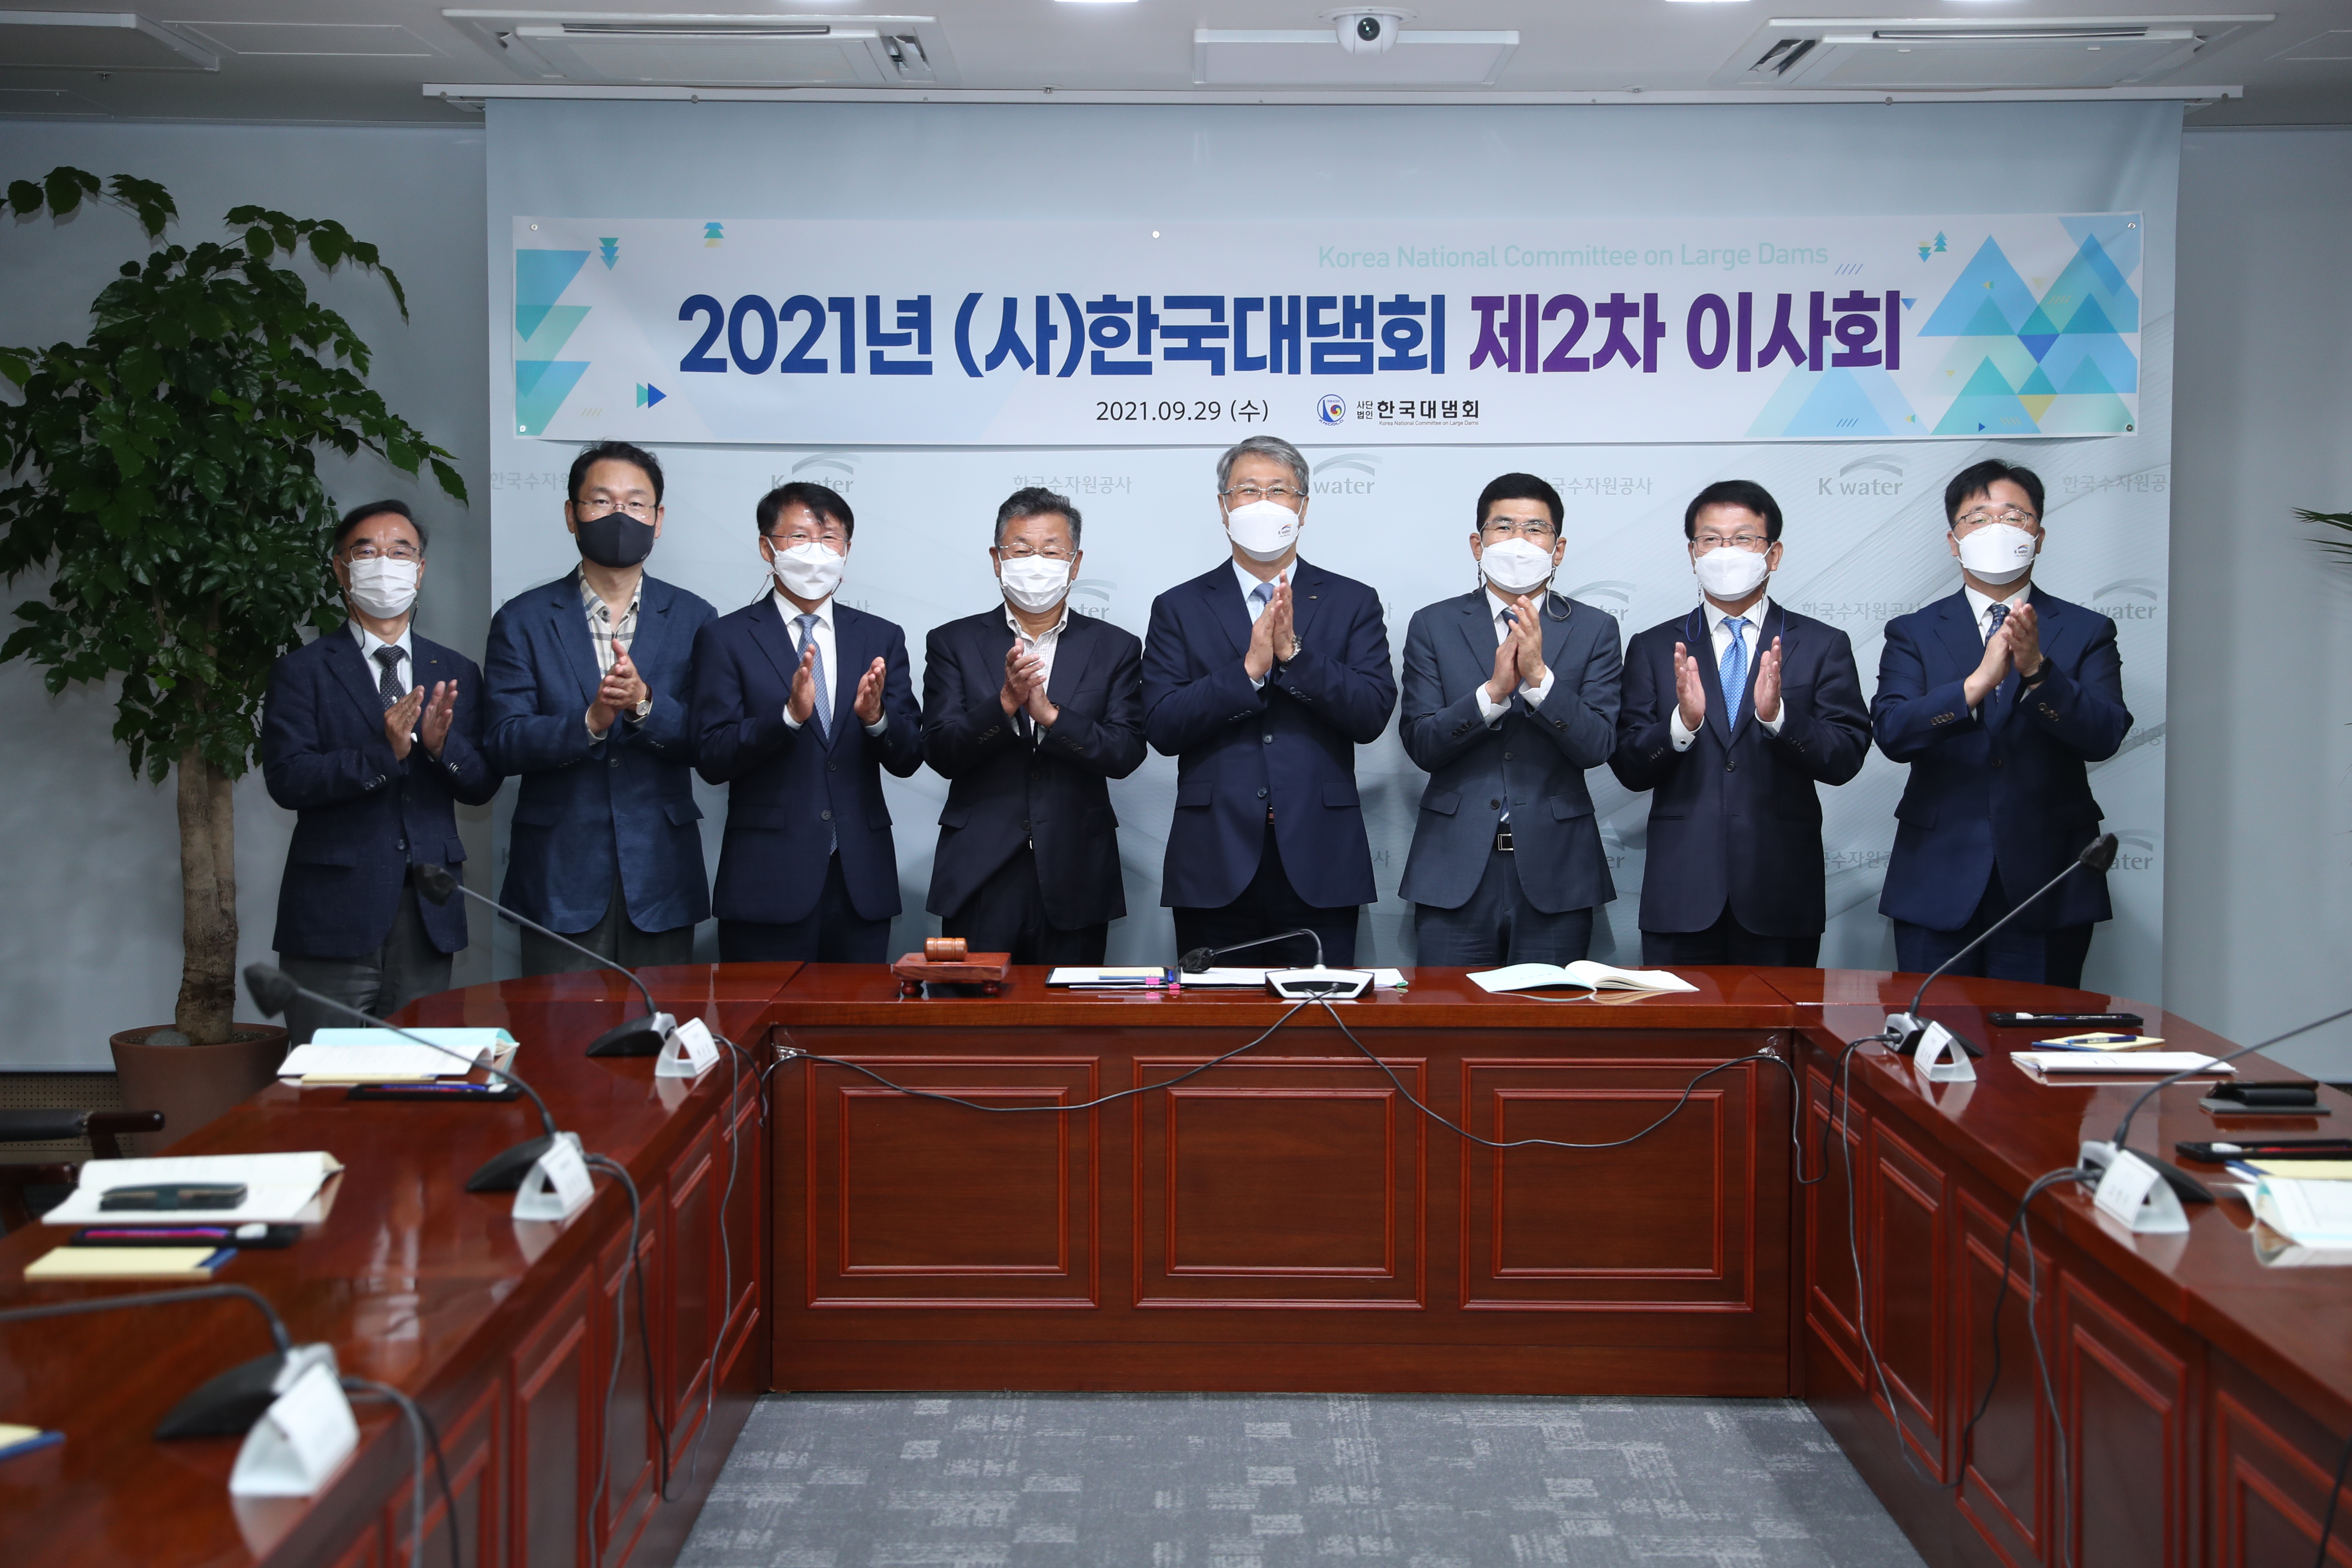 Korea National Committee on Large Dams 2nd Board Meeting